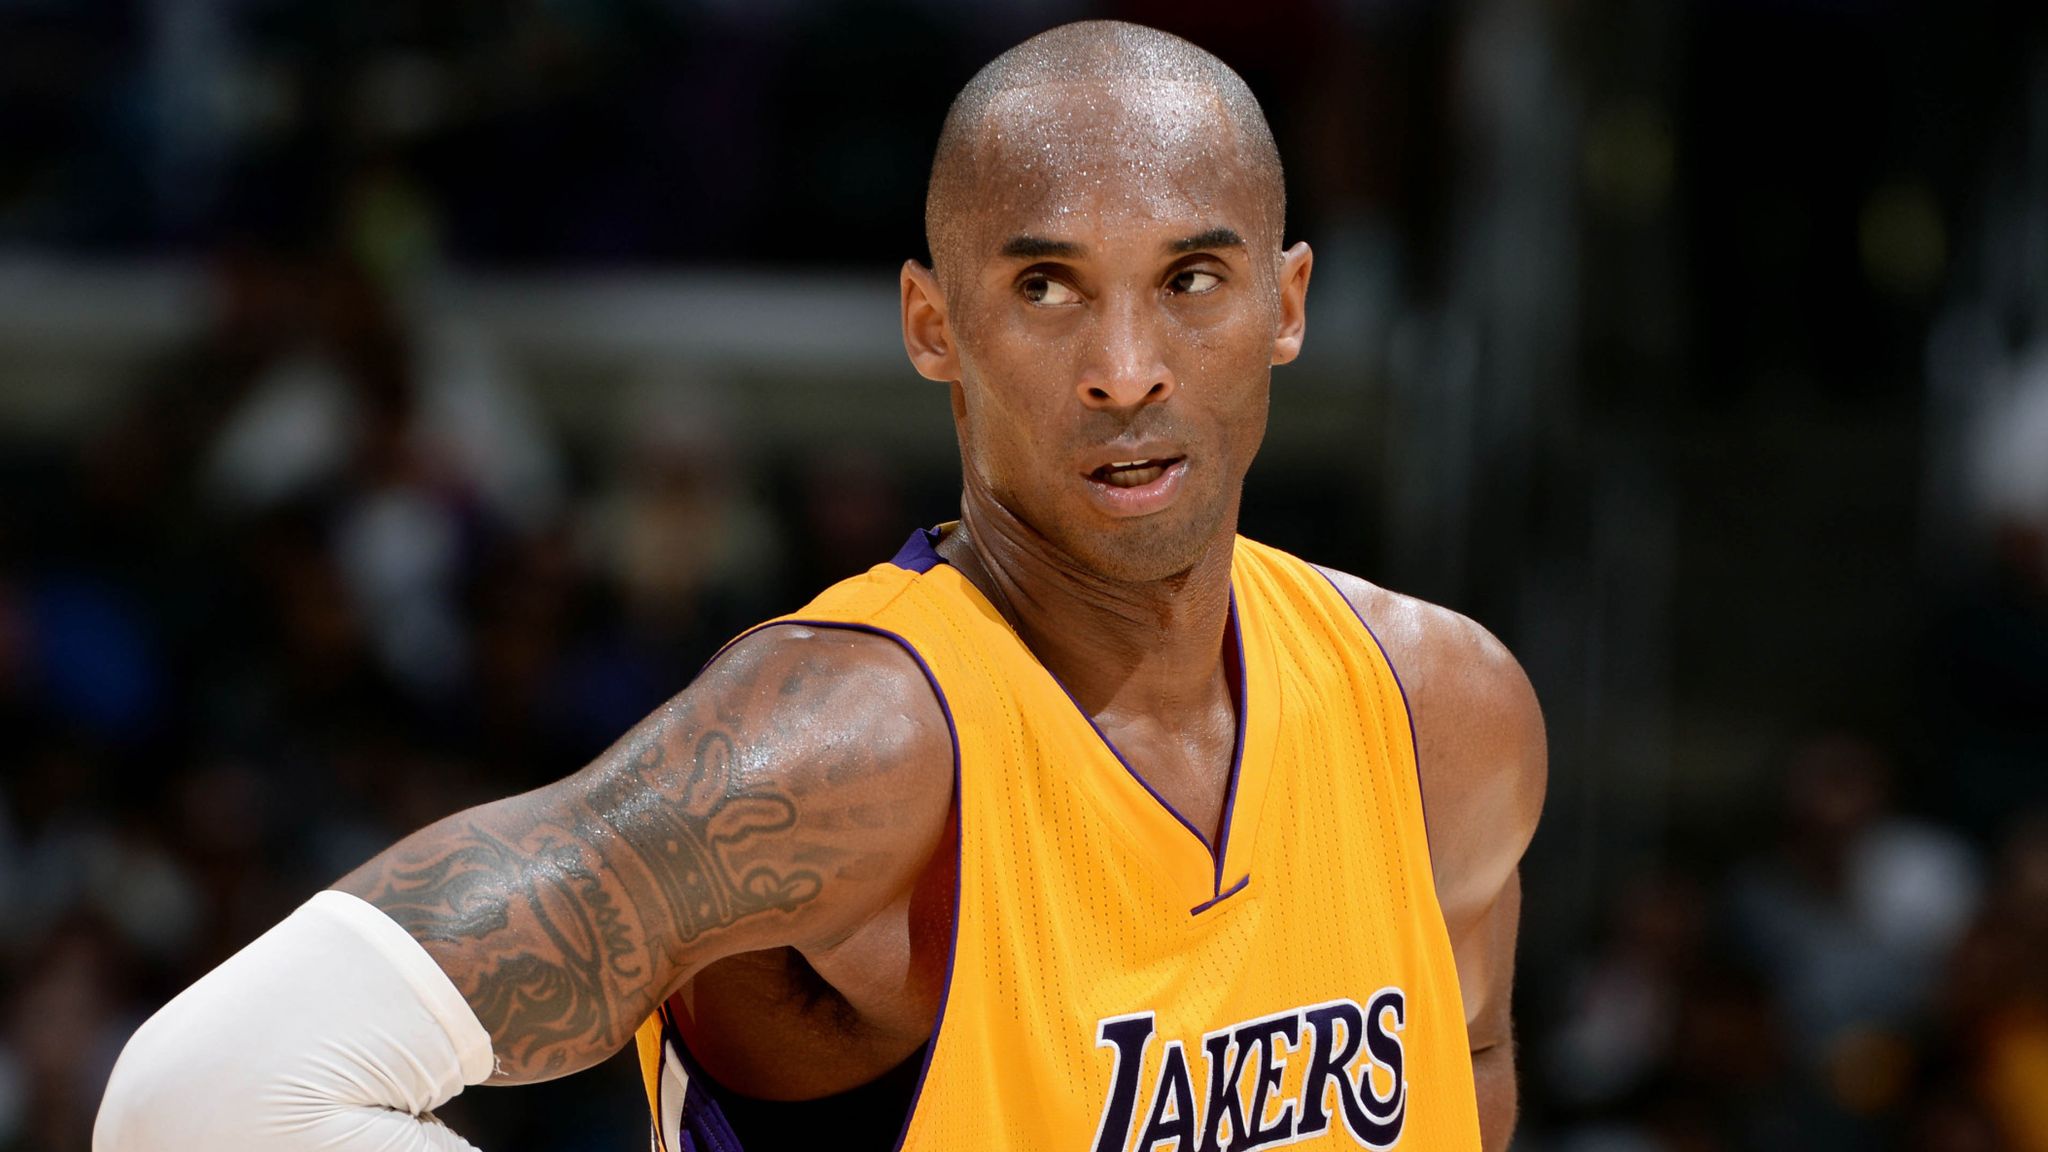 Black Mamba (Kobe Bryant) - Los Angeles Lakers - Mixed Media Origina